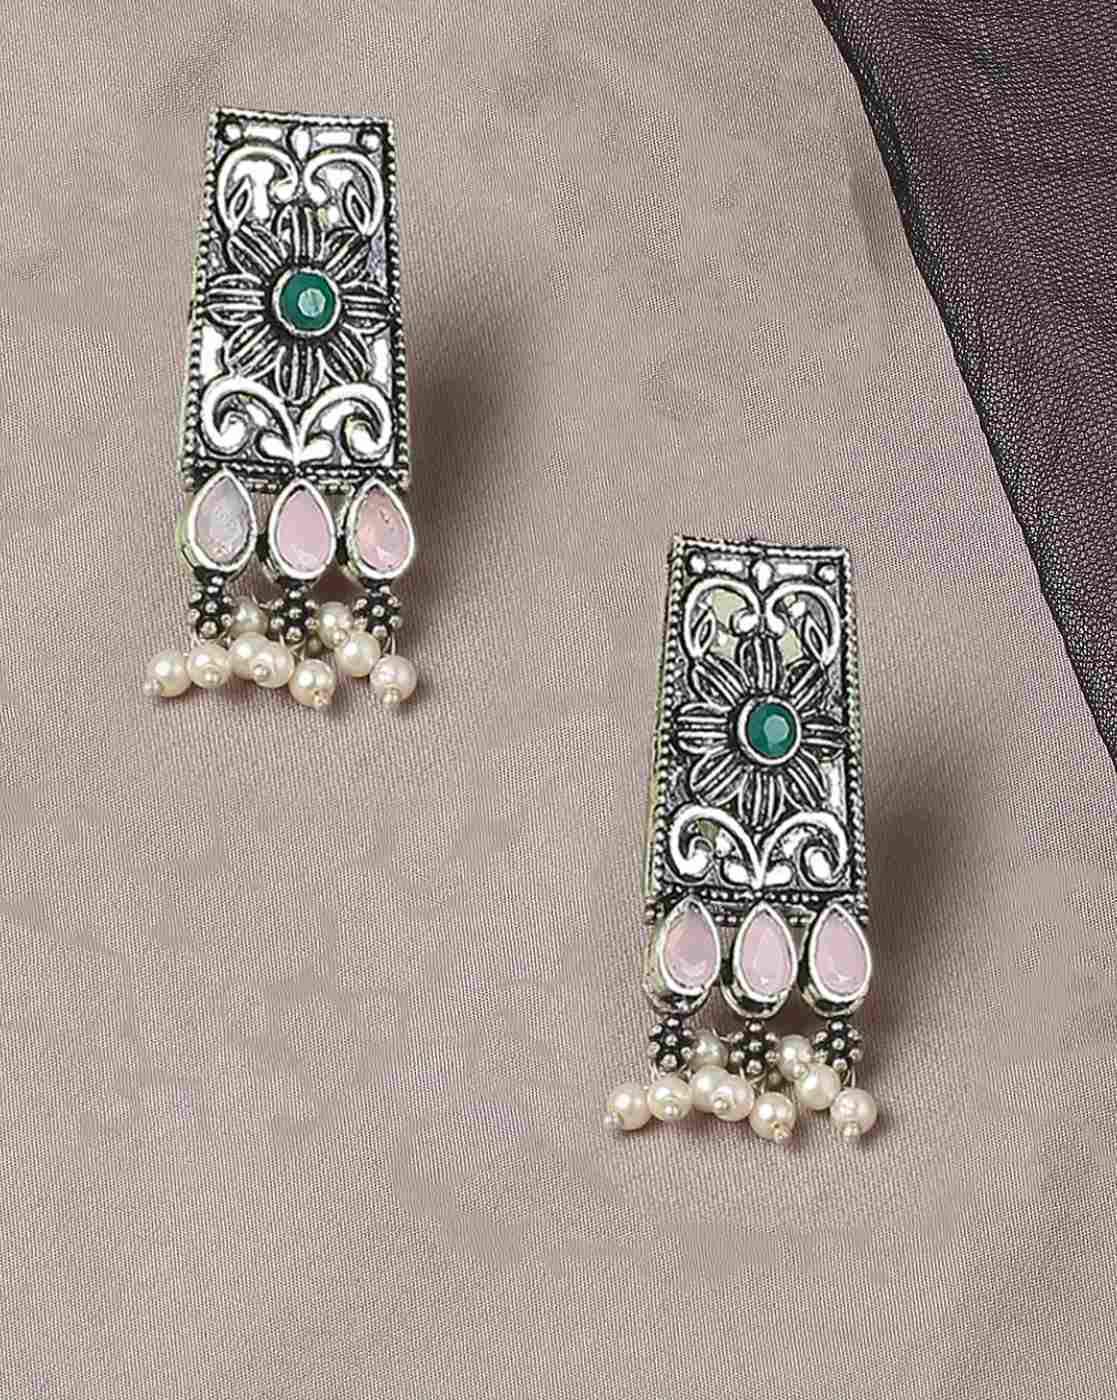 Silvora Small Celtic Knot Hoop Earring 925 Sterling Silver Huggie Earrings  for Women Men Jewelry Gift Christmas Valentine's Day - Walmart.com